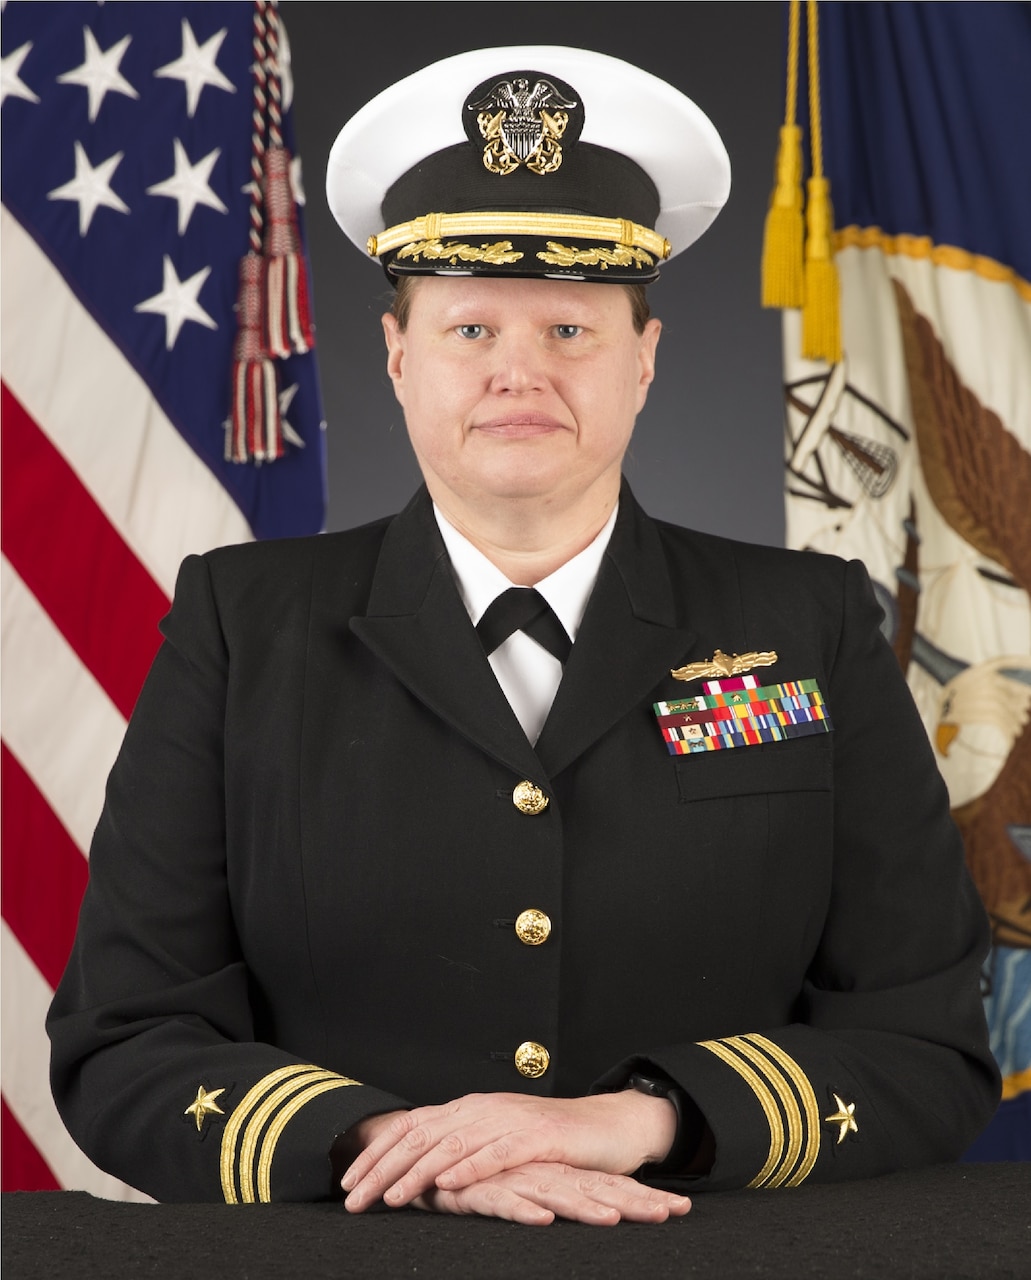 Commander Tammi L. Ballinger